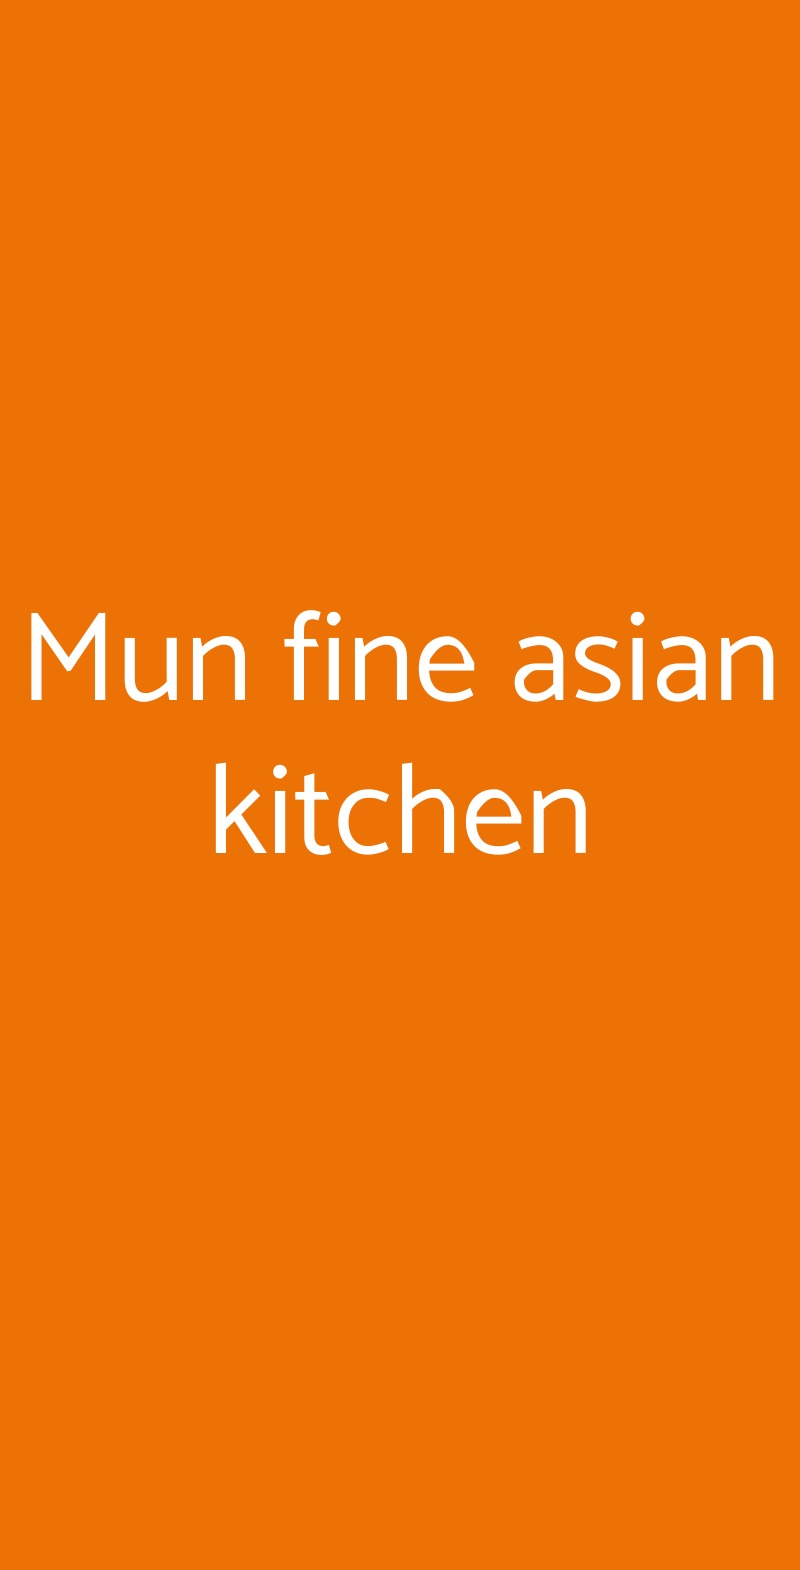 Mun fine asian kitchen Milano menù 1 pagina